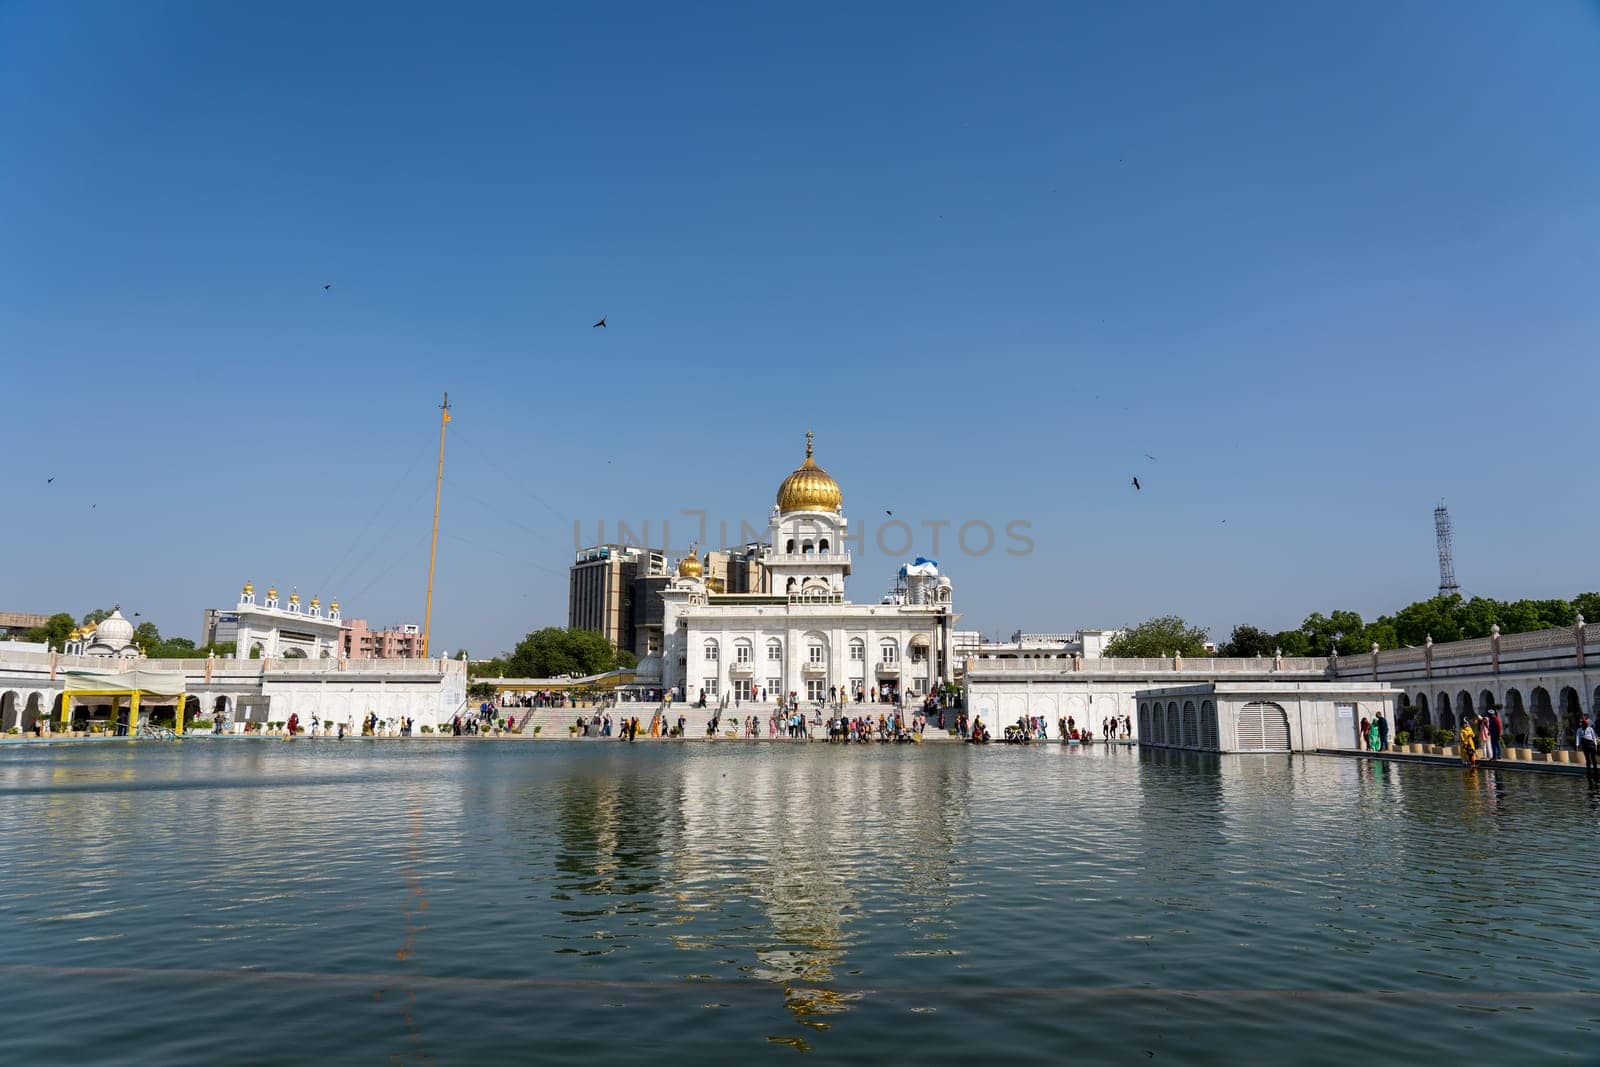 Sikh Temple Gurudwara Bangla Sahib in Delhi by oliverfoerstner